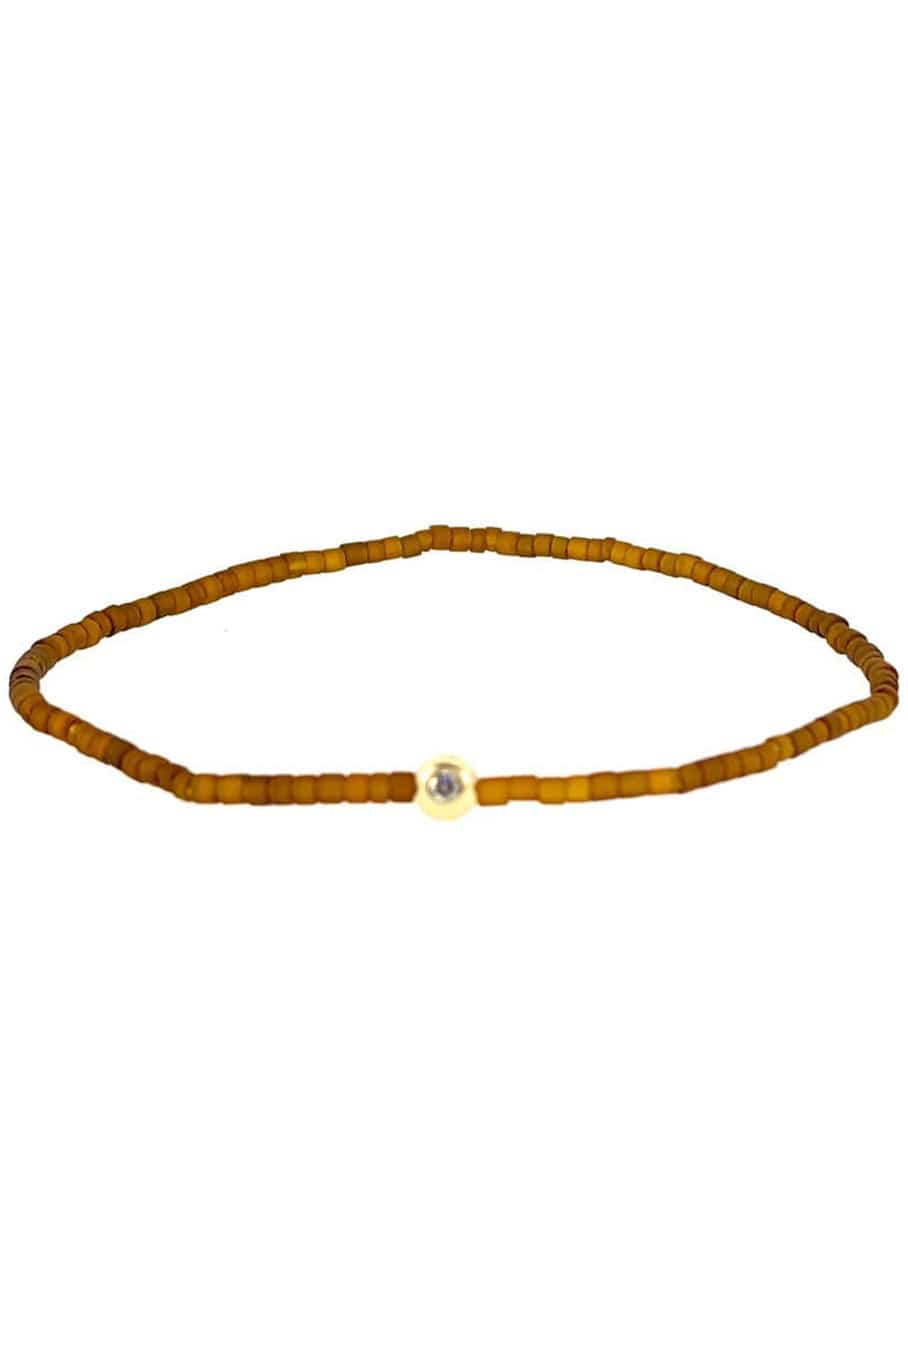 LUIS MORAIS-Diamond On Brown Glass Bead Bracelet-YELLOW GOLD